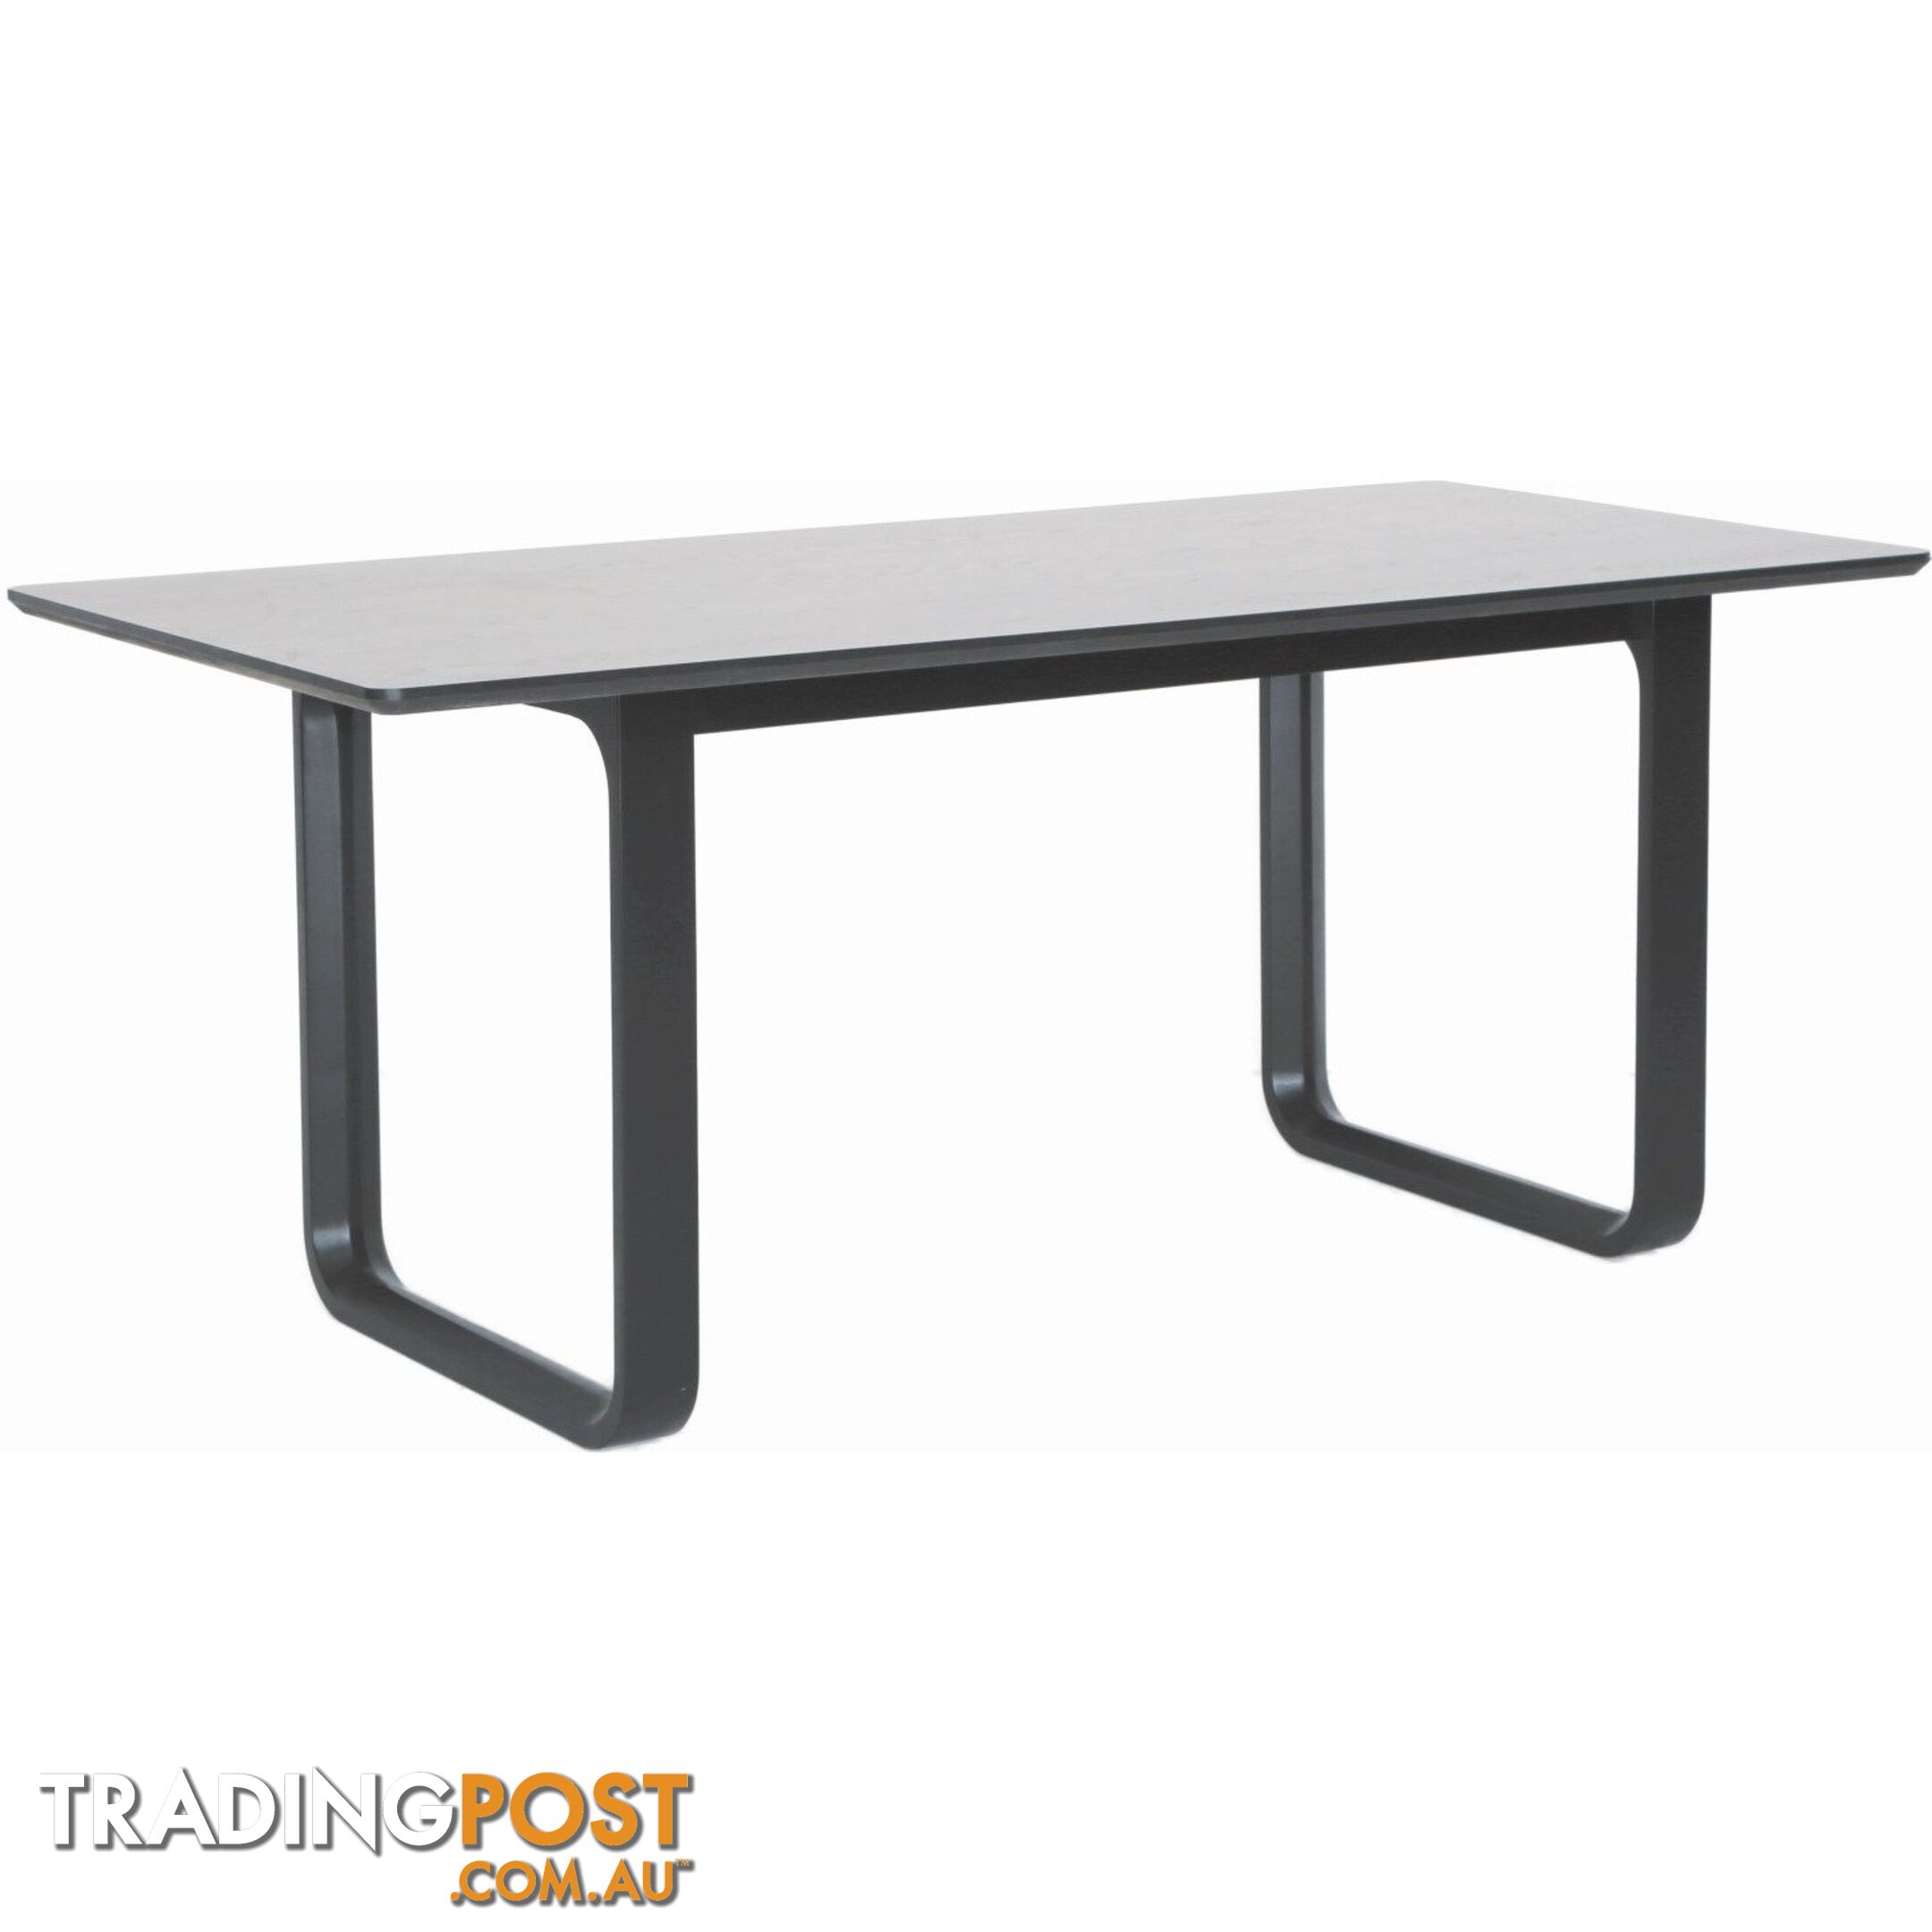 ULMER Dining Table 180cm - Black Ash & White Grey - ULMER18_DT114-164 - 9334719003566